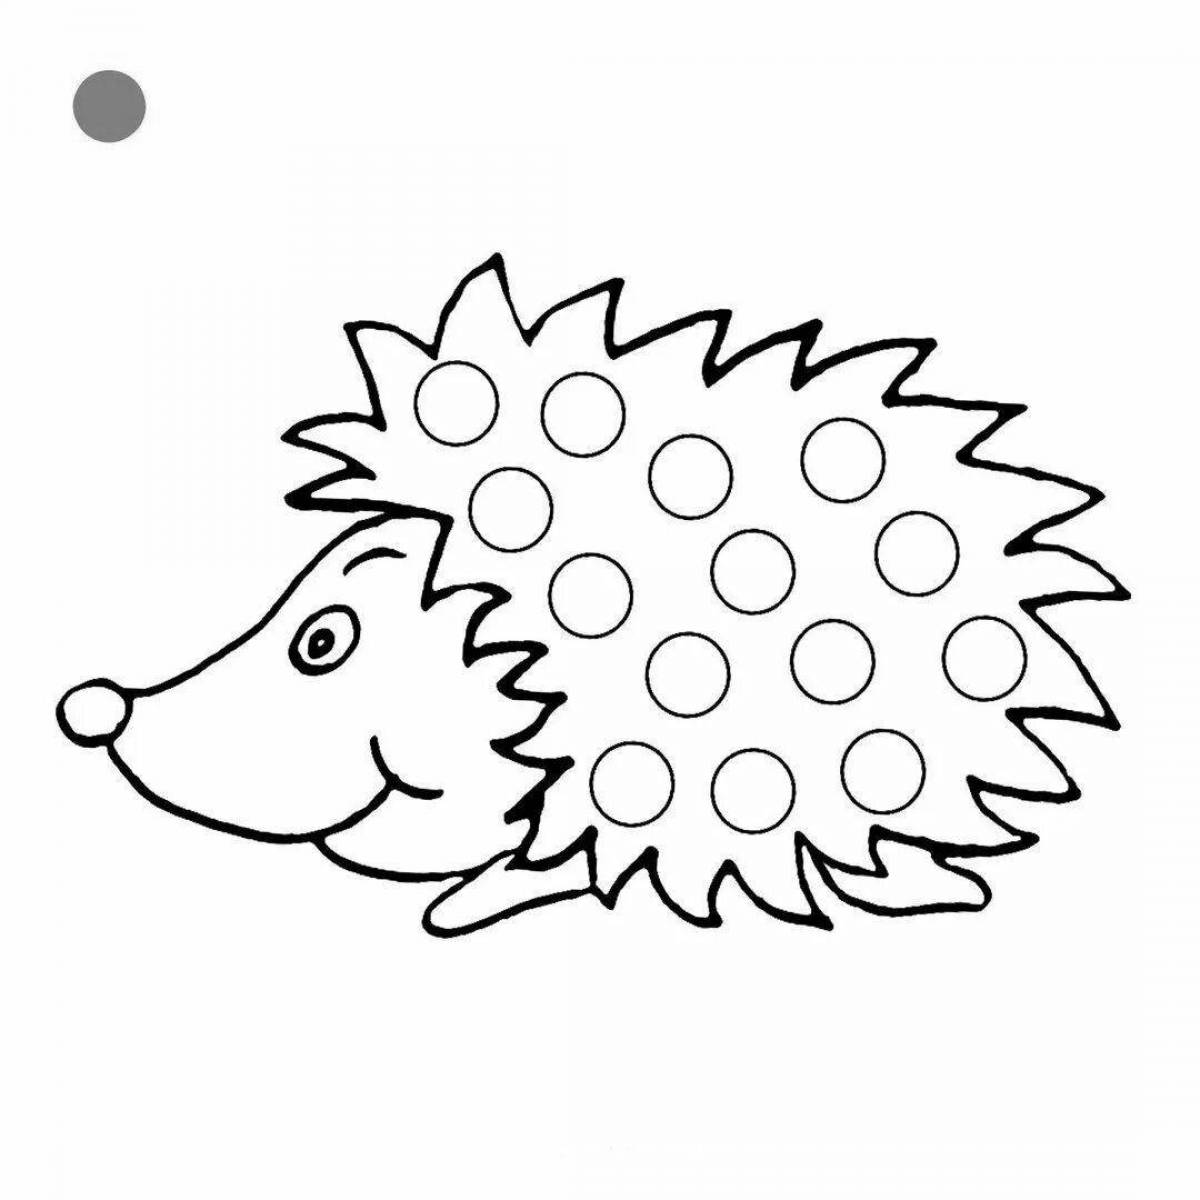 Funny hedgehog drawing for kids